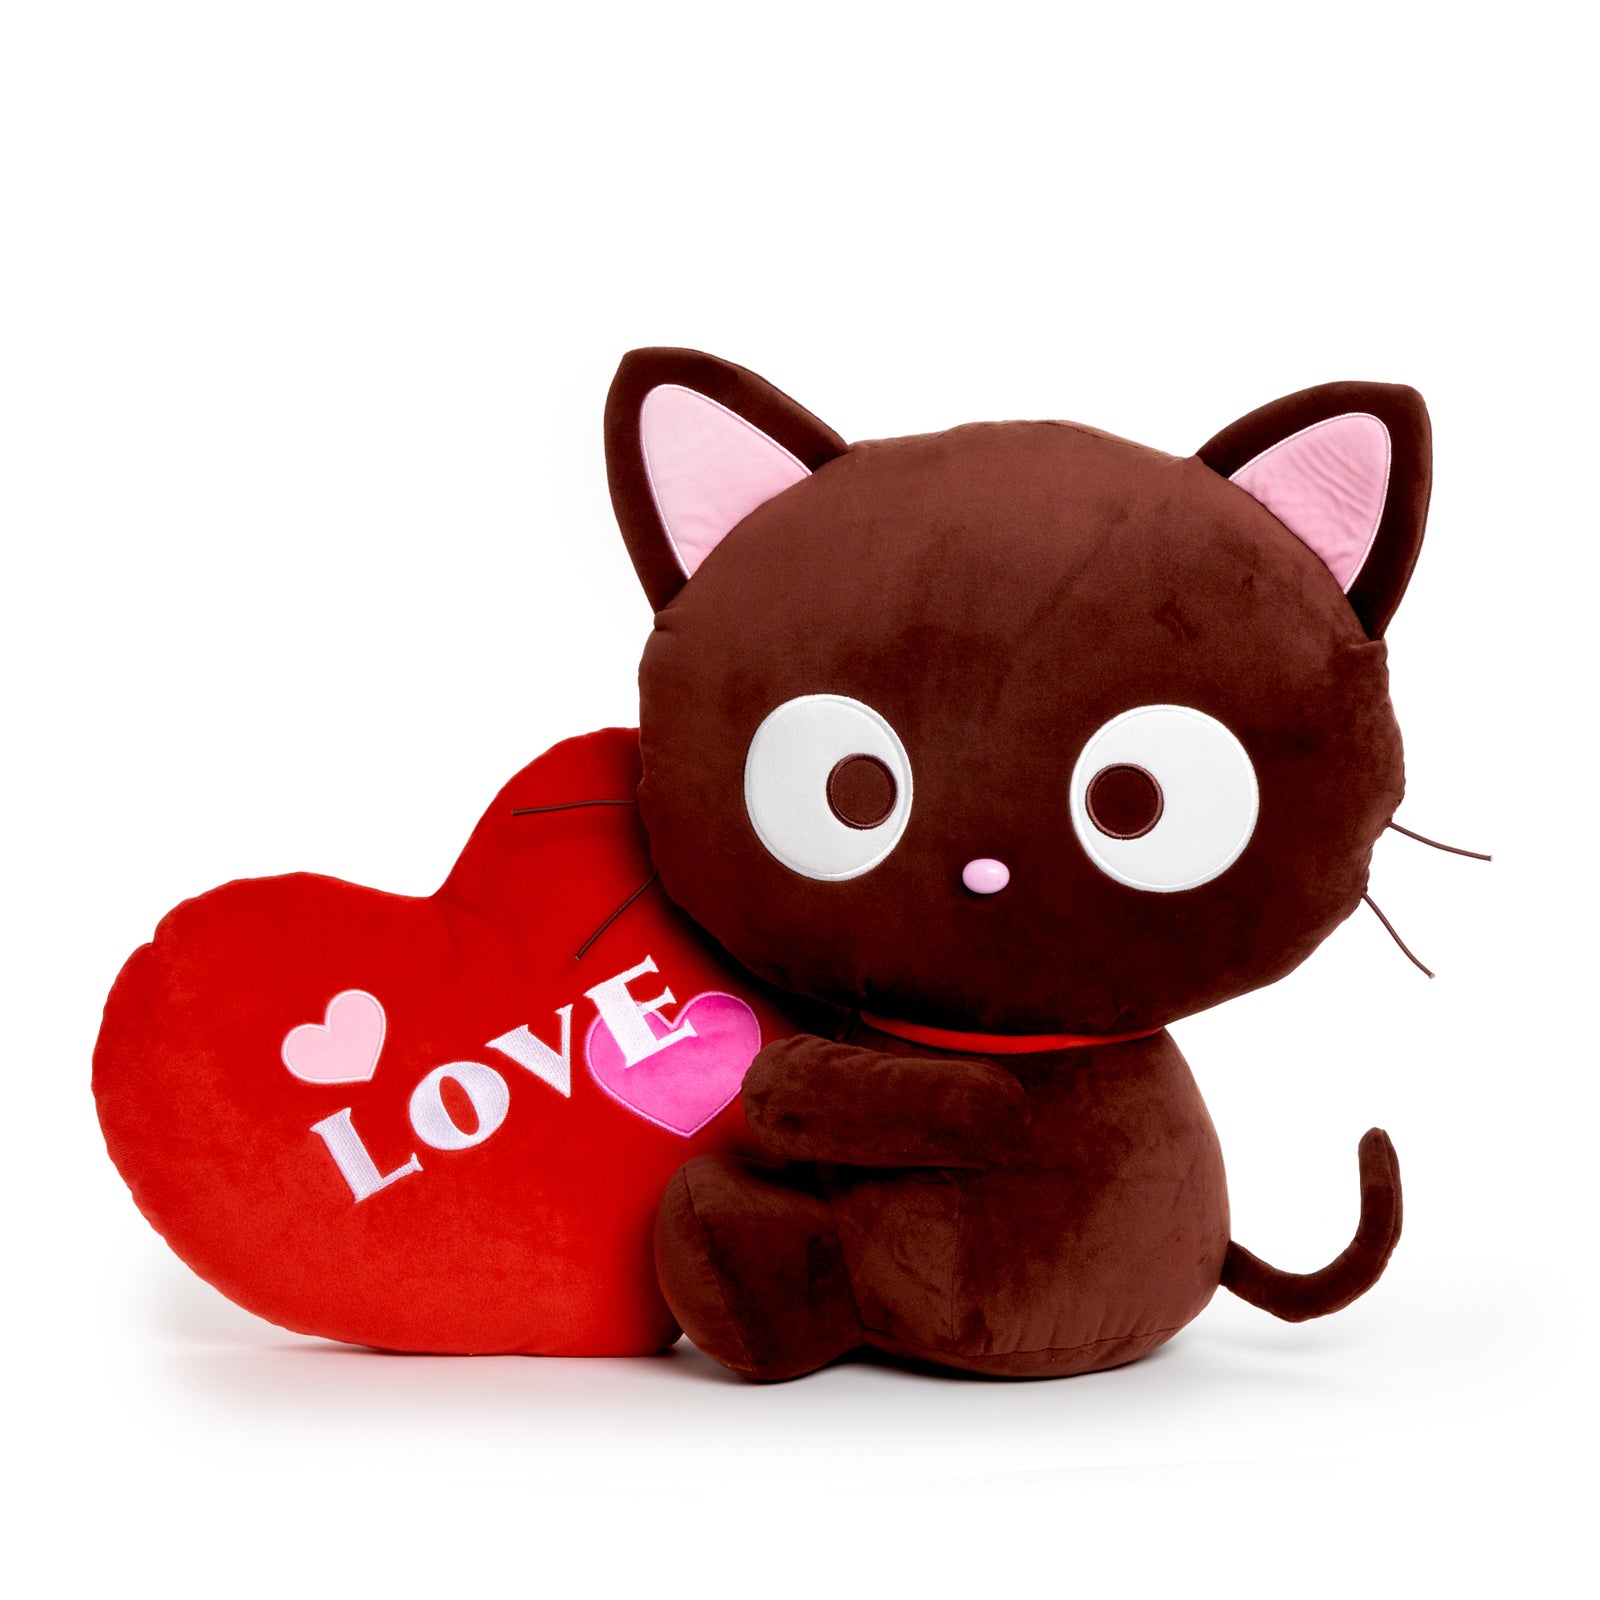 Chococat deserves more merch!! #sanrio #sanriostickers